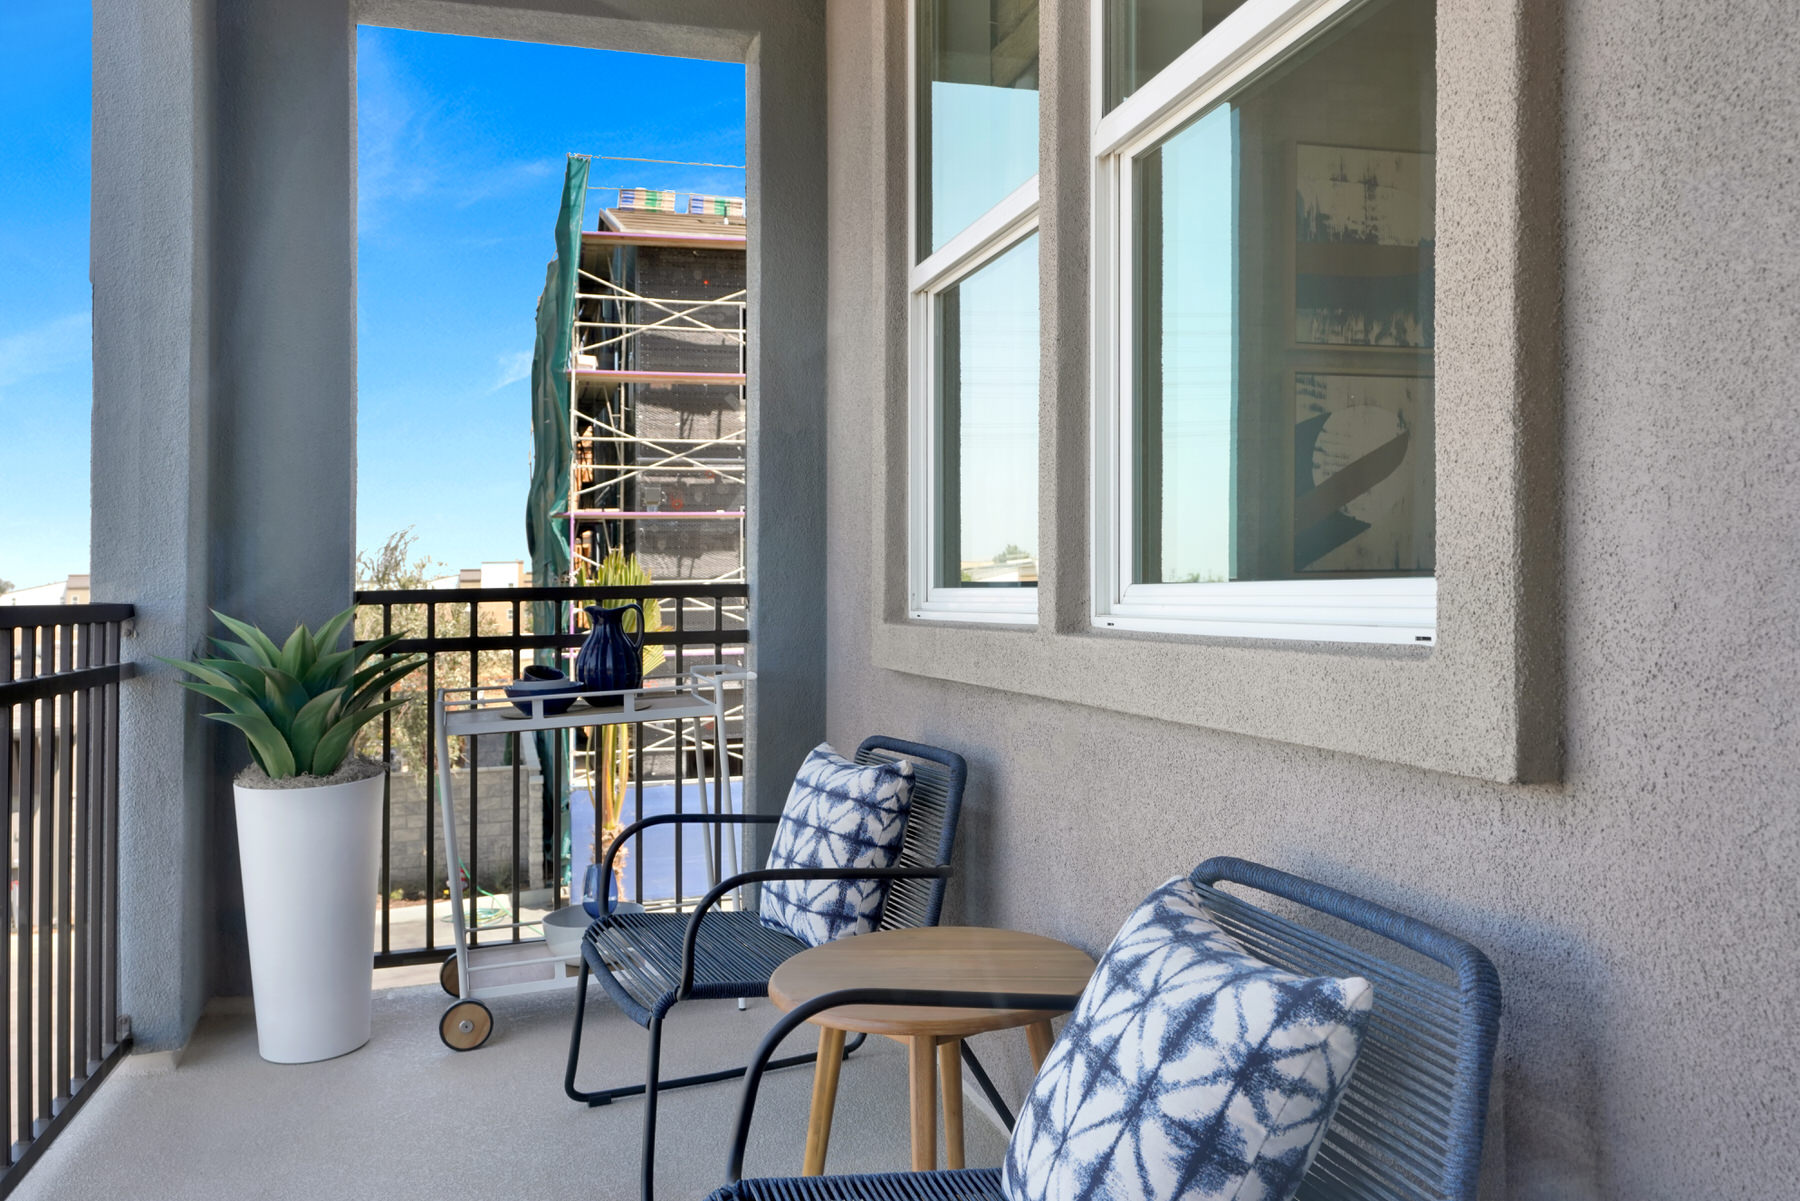 Balcony in Plan 2 at Moneta Pointe by Melia Homes in Gardena, CA